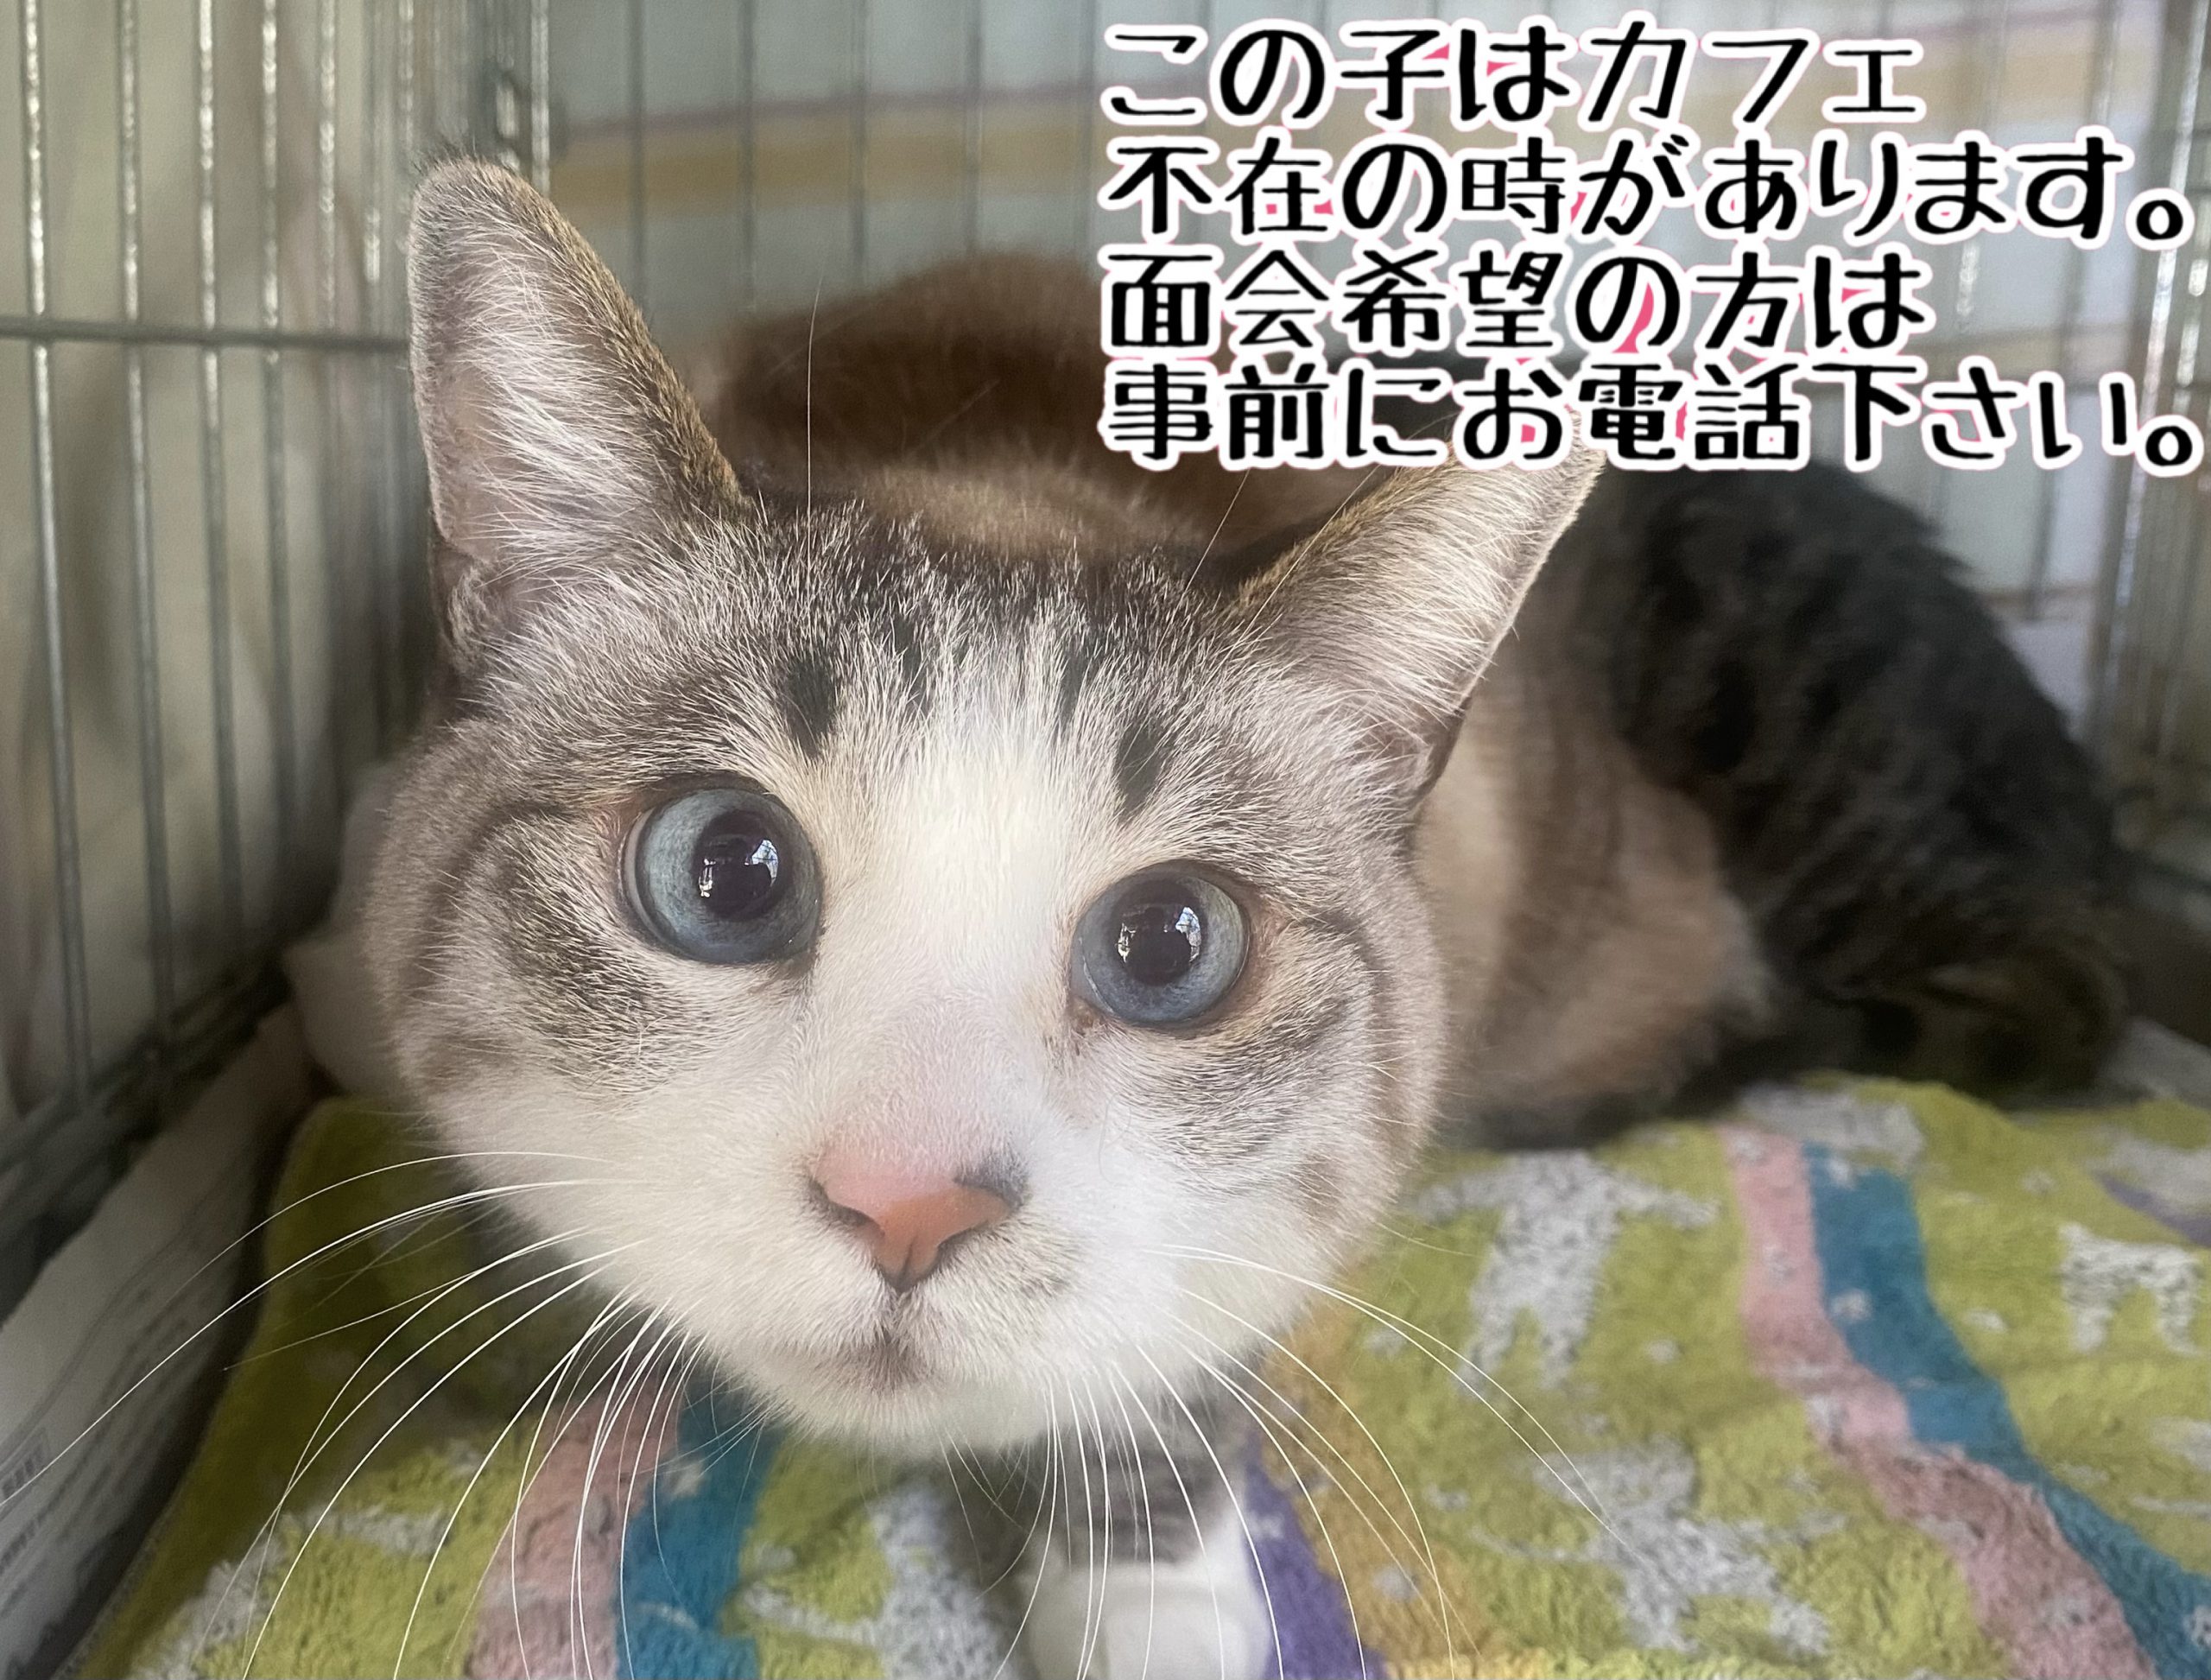 <ul>
<li>猫種：日本猫</li>
<li>名前（性別）：モモ(女の子)</li>
<li>年齢：2011年頃生まれ</li>
<li>保護経緯：飼い主が高齢になり施設入居のため飼育困難</li>
</ul>
